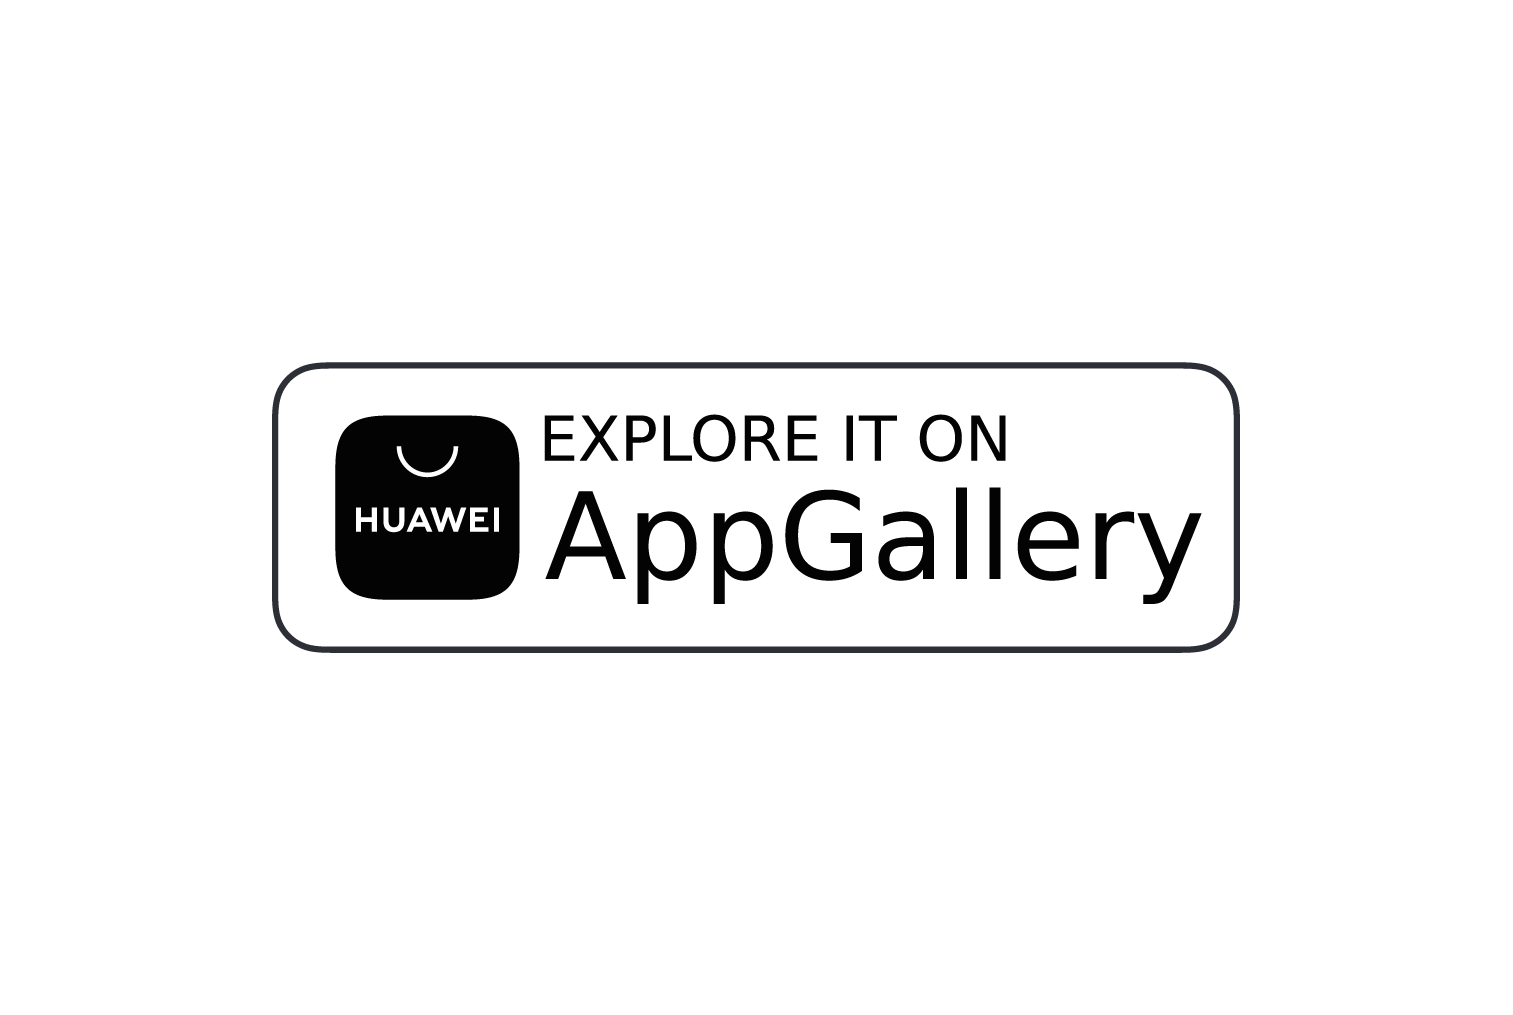 Appgallery google play. App Gallery логотип. Хуавей APPGALLERY. Huawei app Gallery значок. Откройте в app Gallery svg.